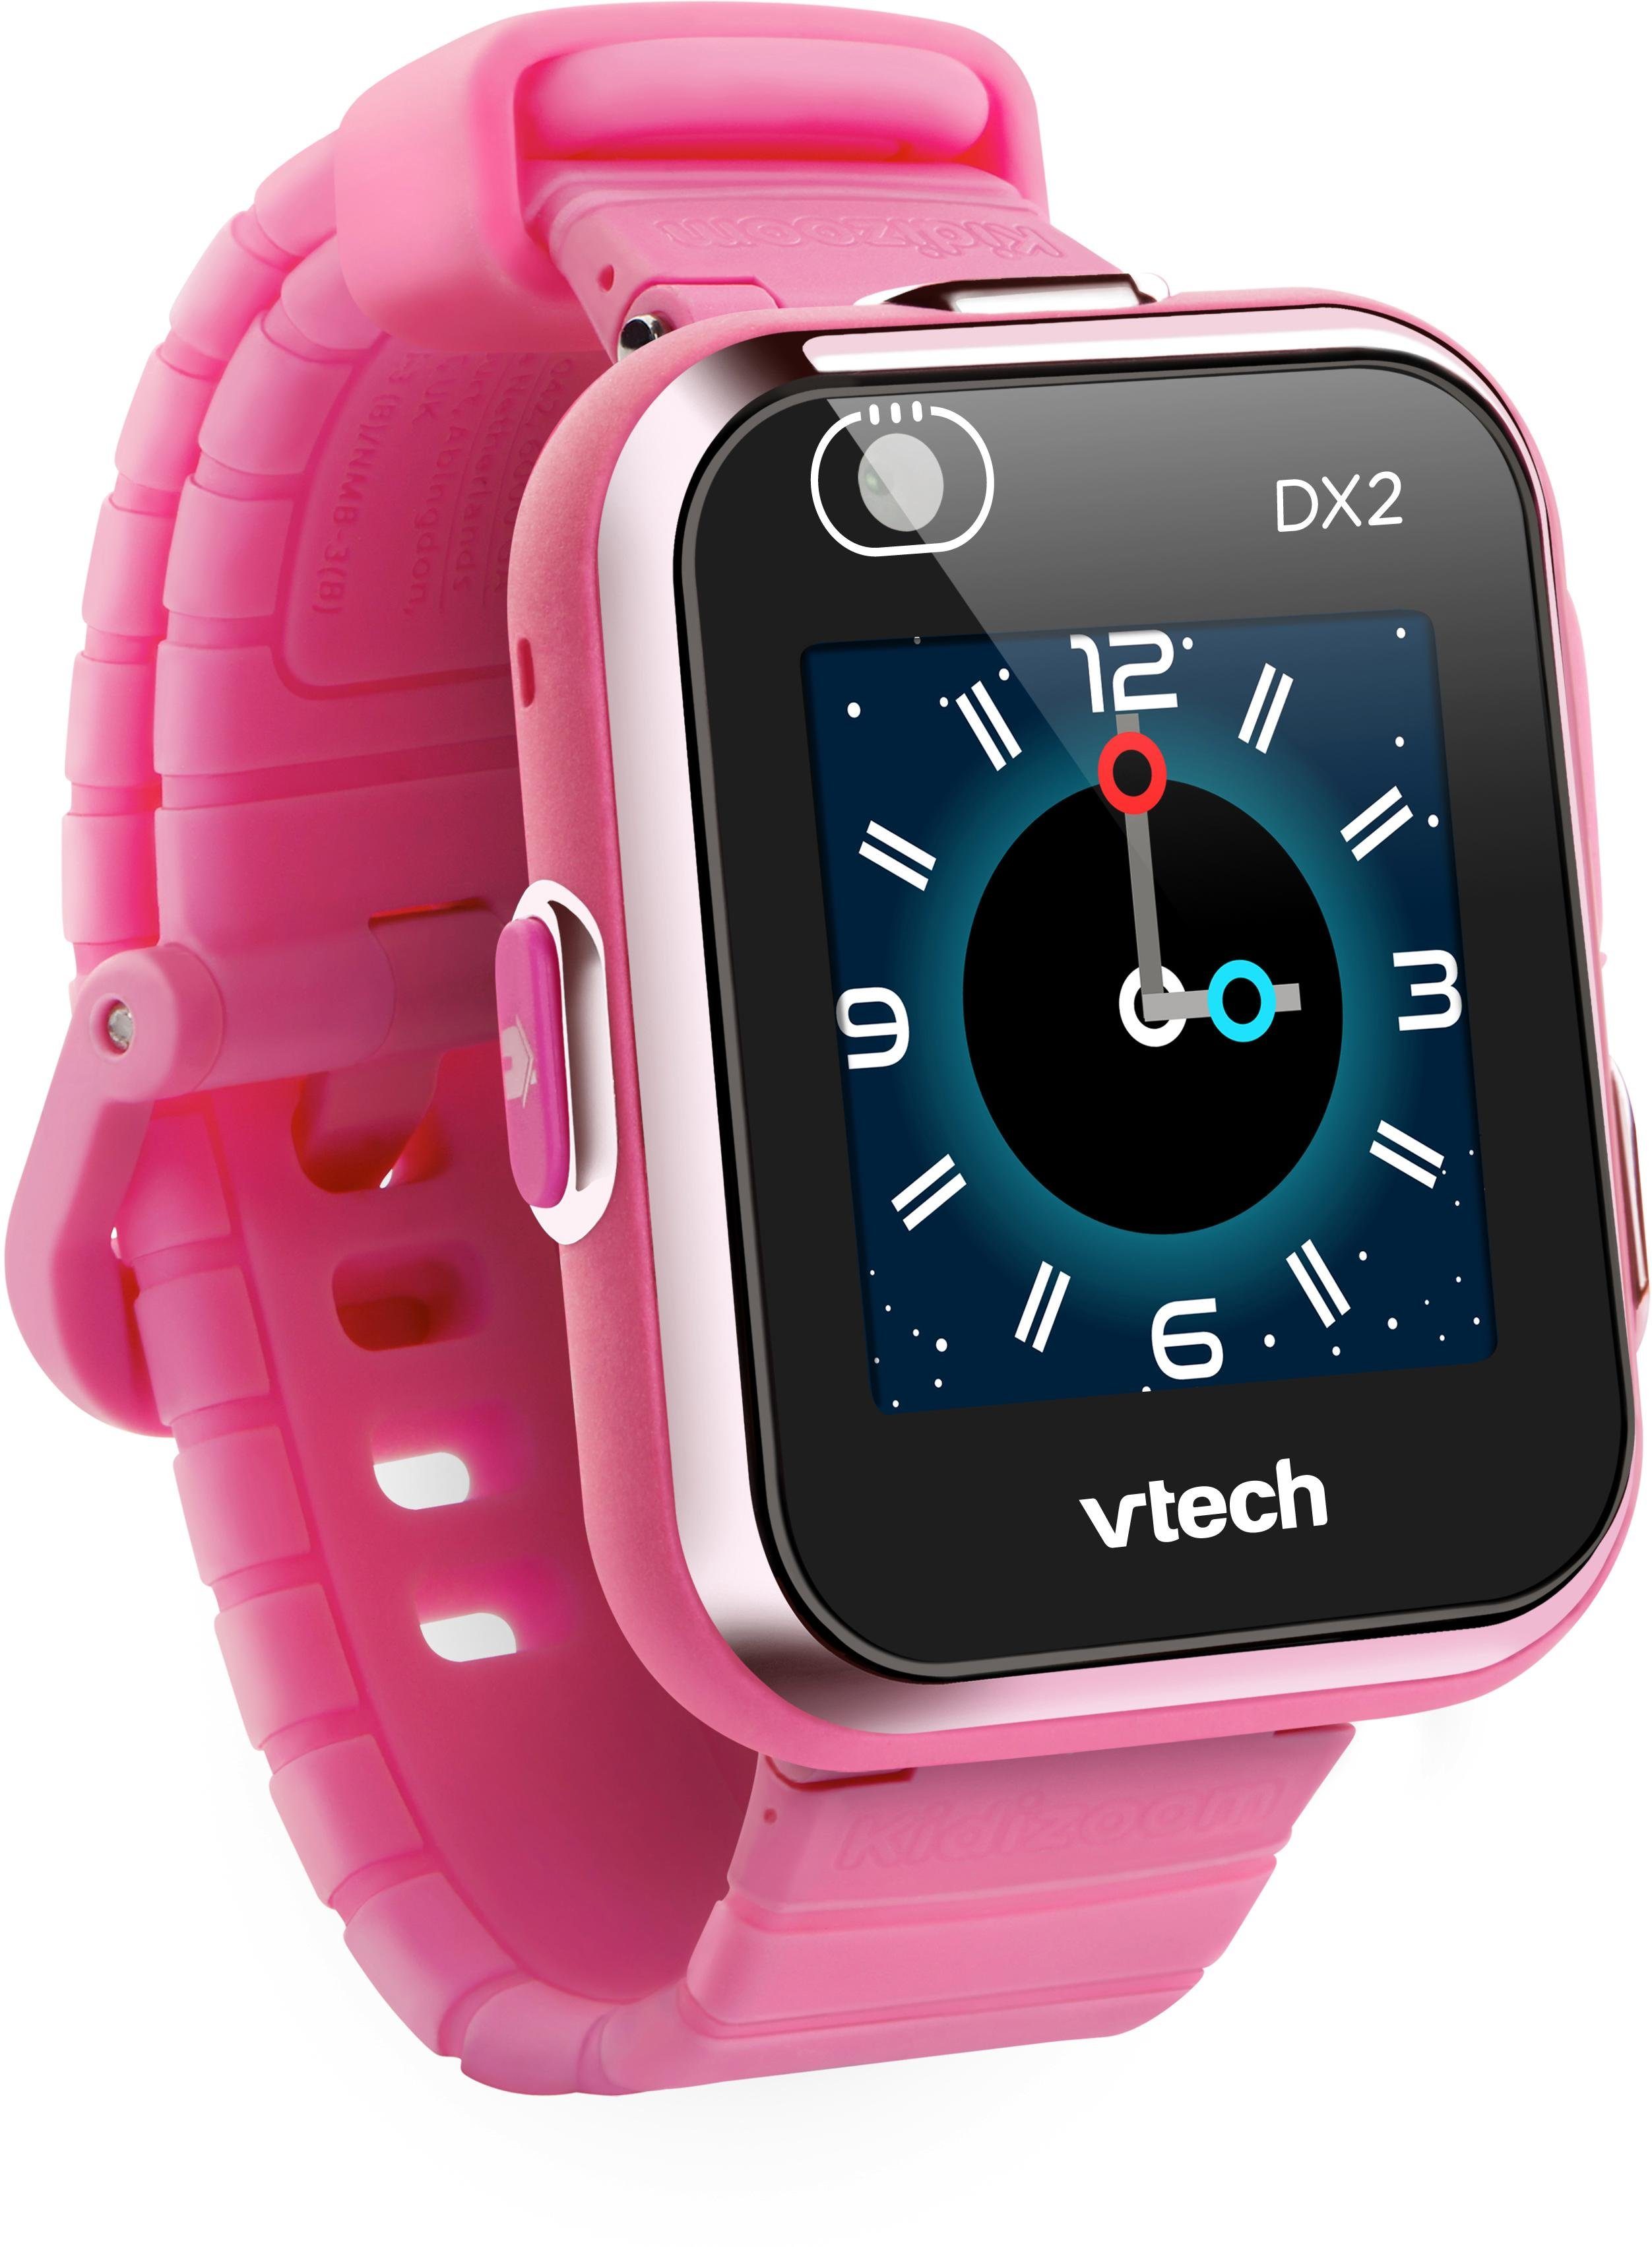 Vtech® Lernspielzeug KidiZoom mit Watch Kamerafunktion DX2, Smart pink